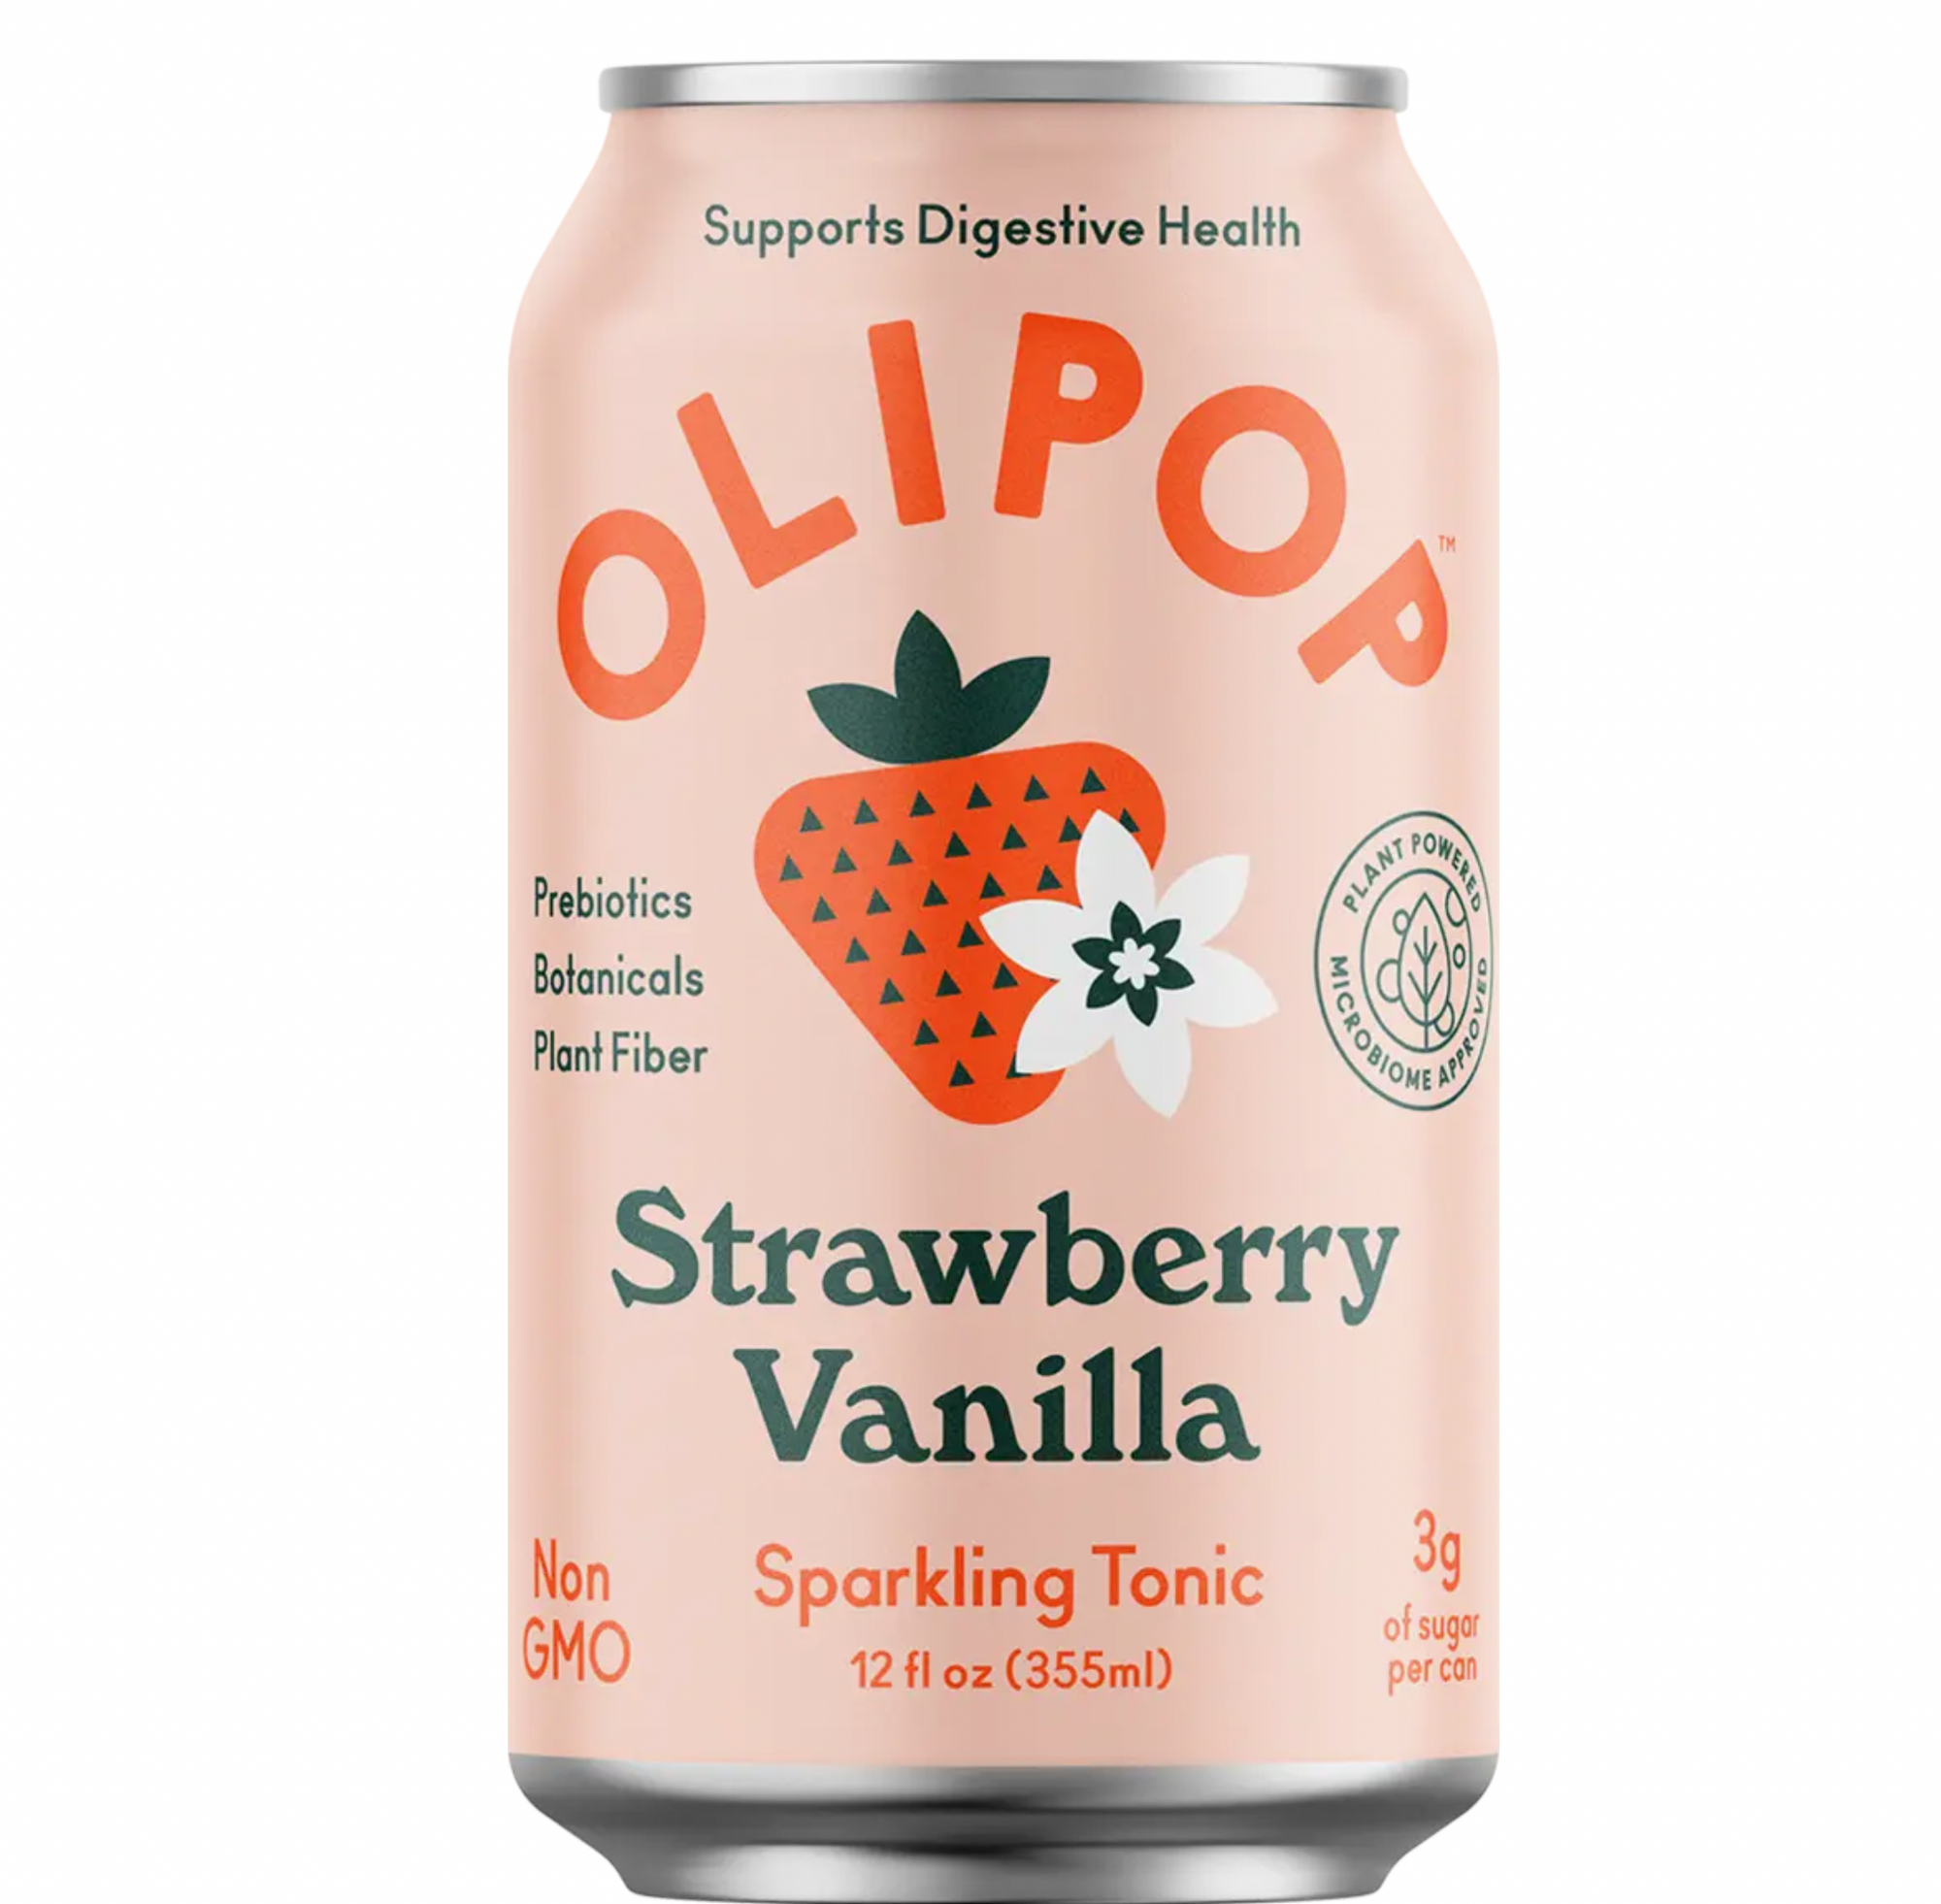 Olipop-Strawberry Vanilla